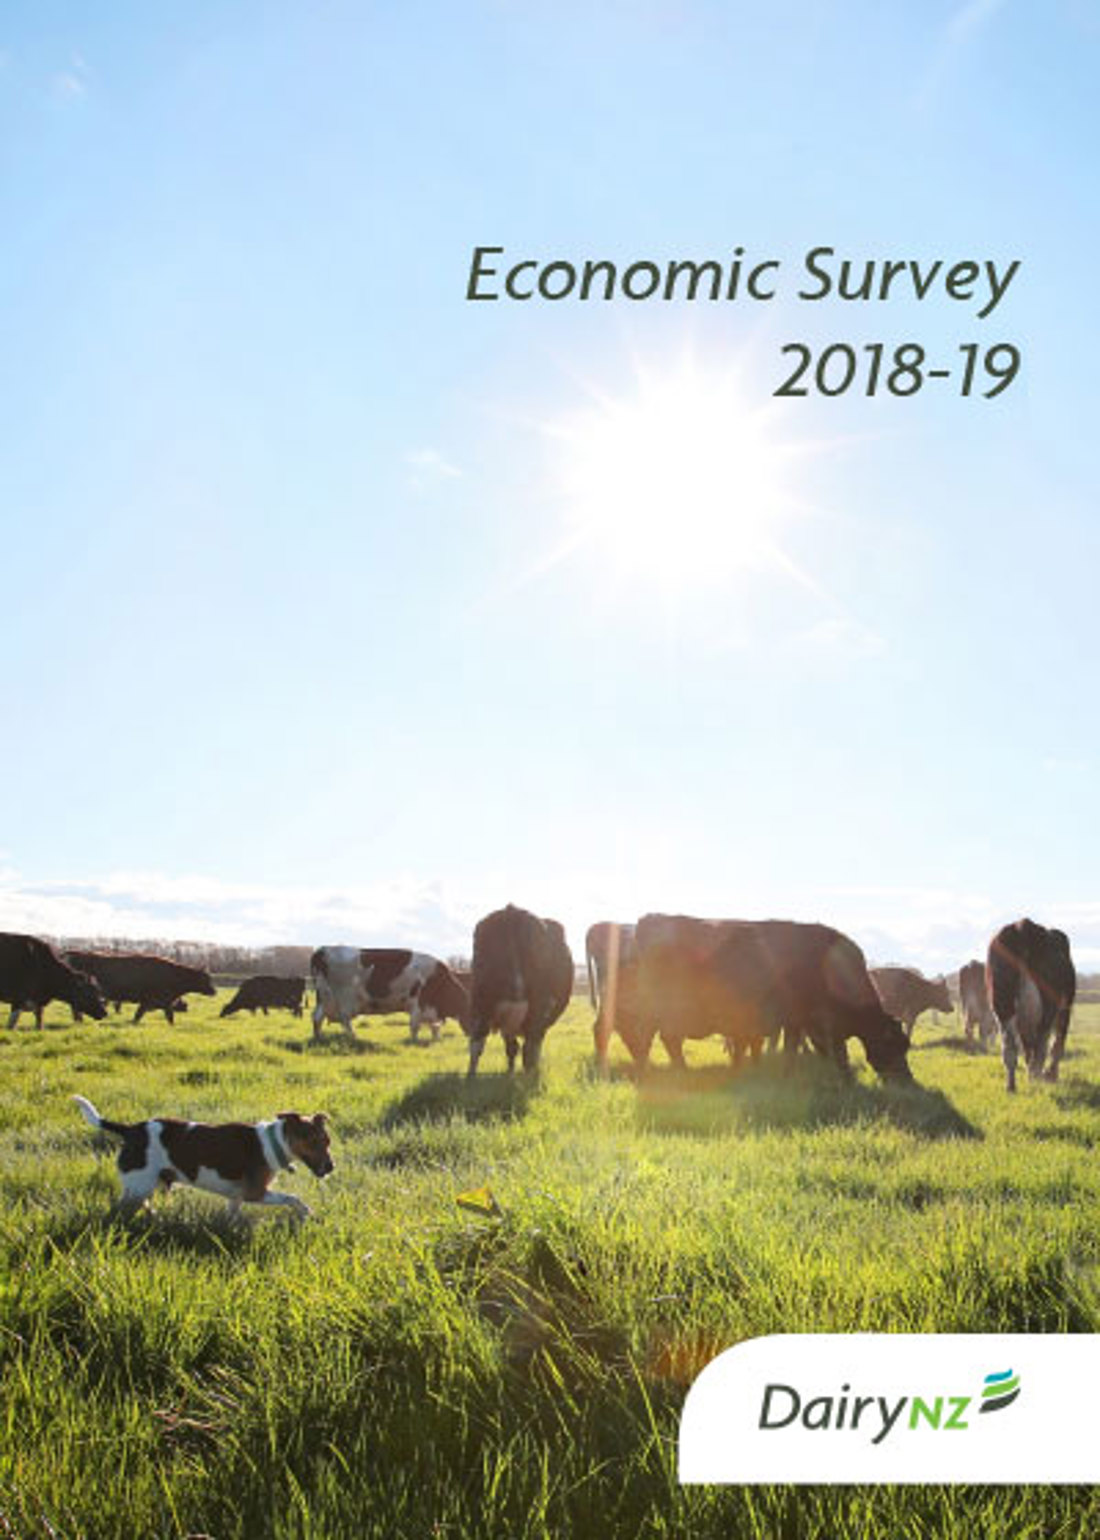 Dairynz Economic Survey 2018 19 Image